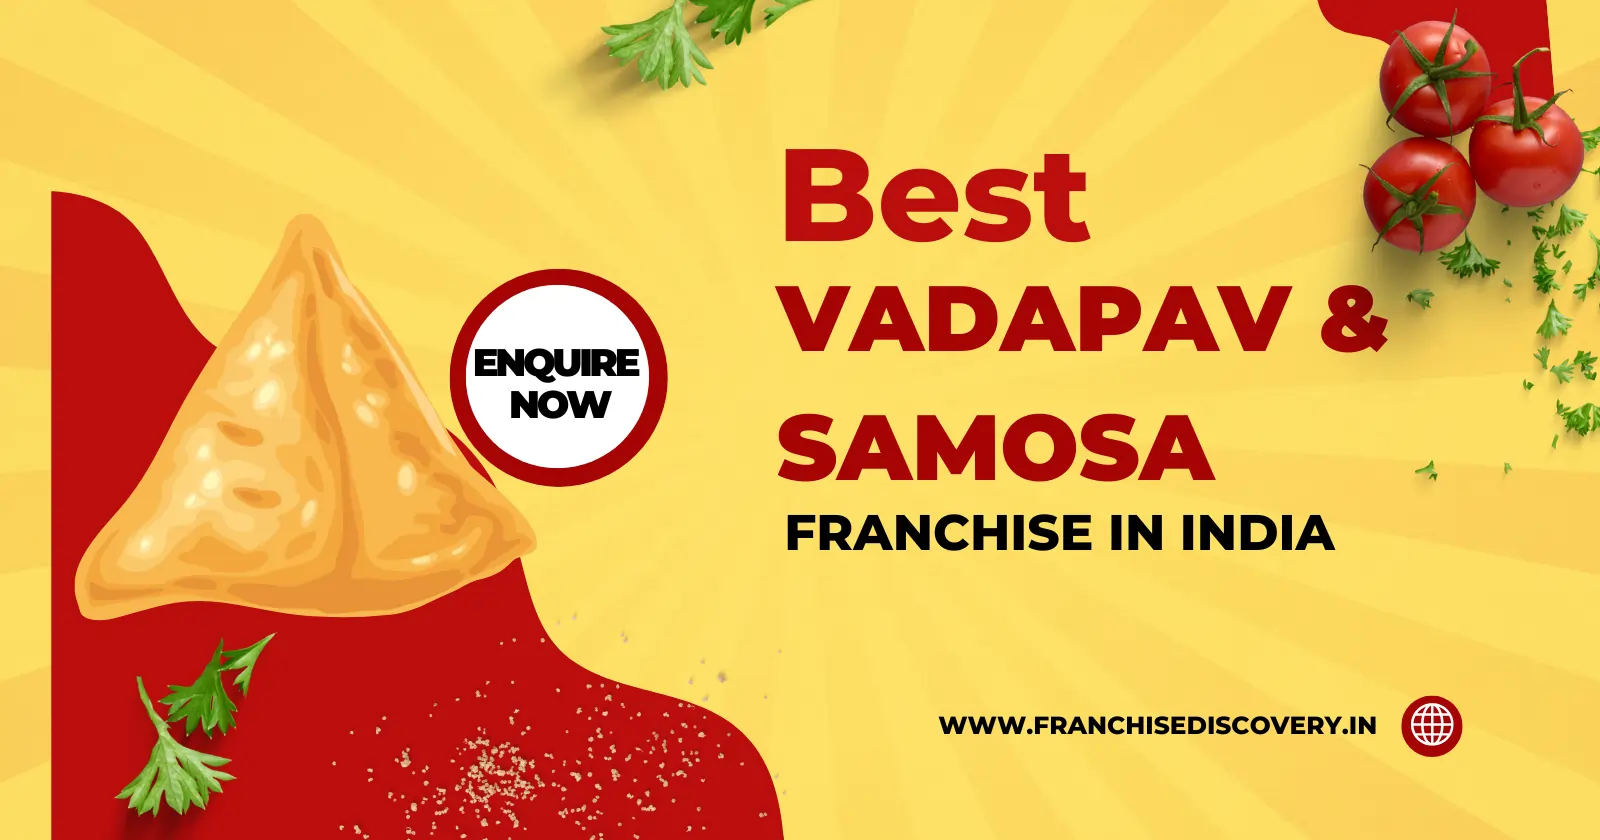 Best Samosa and Vadapav franchise brands in India